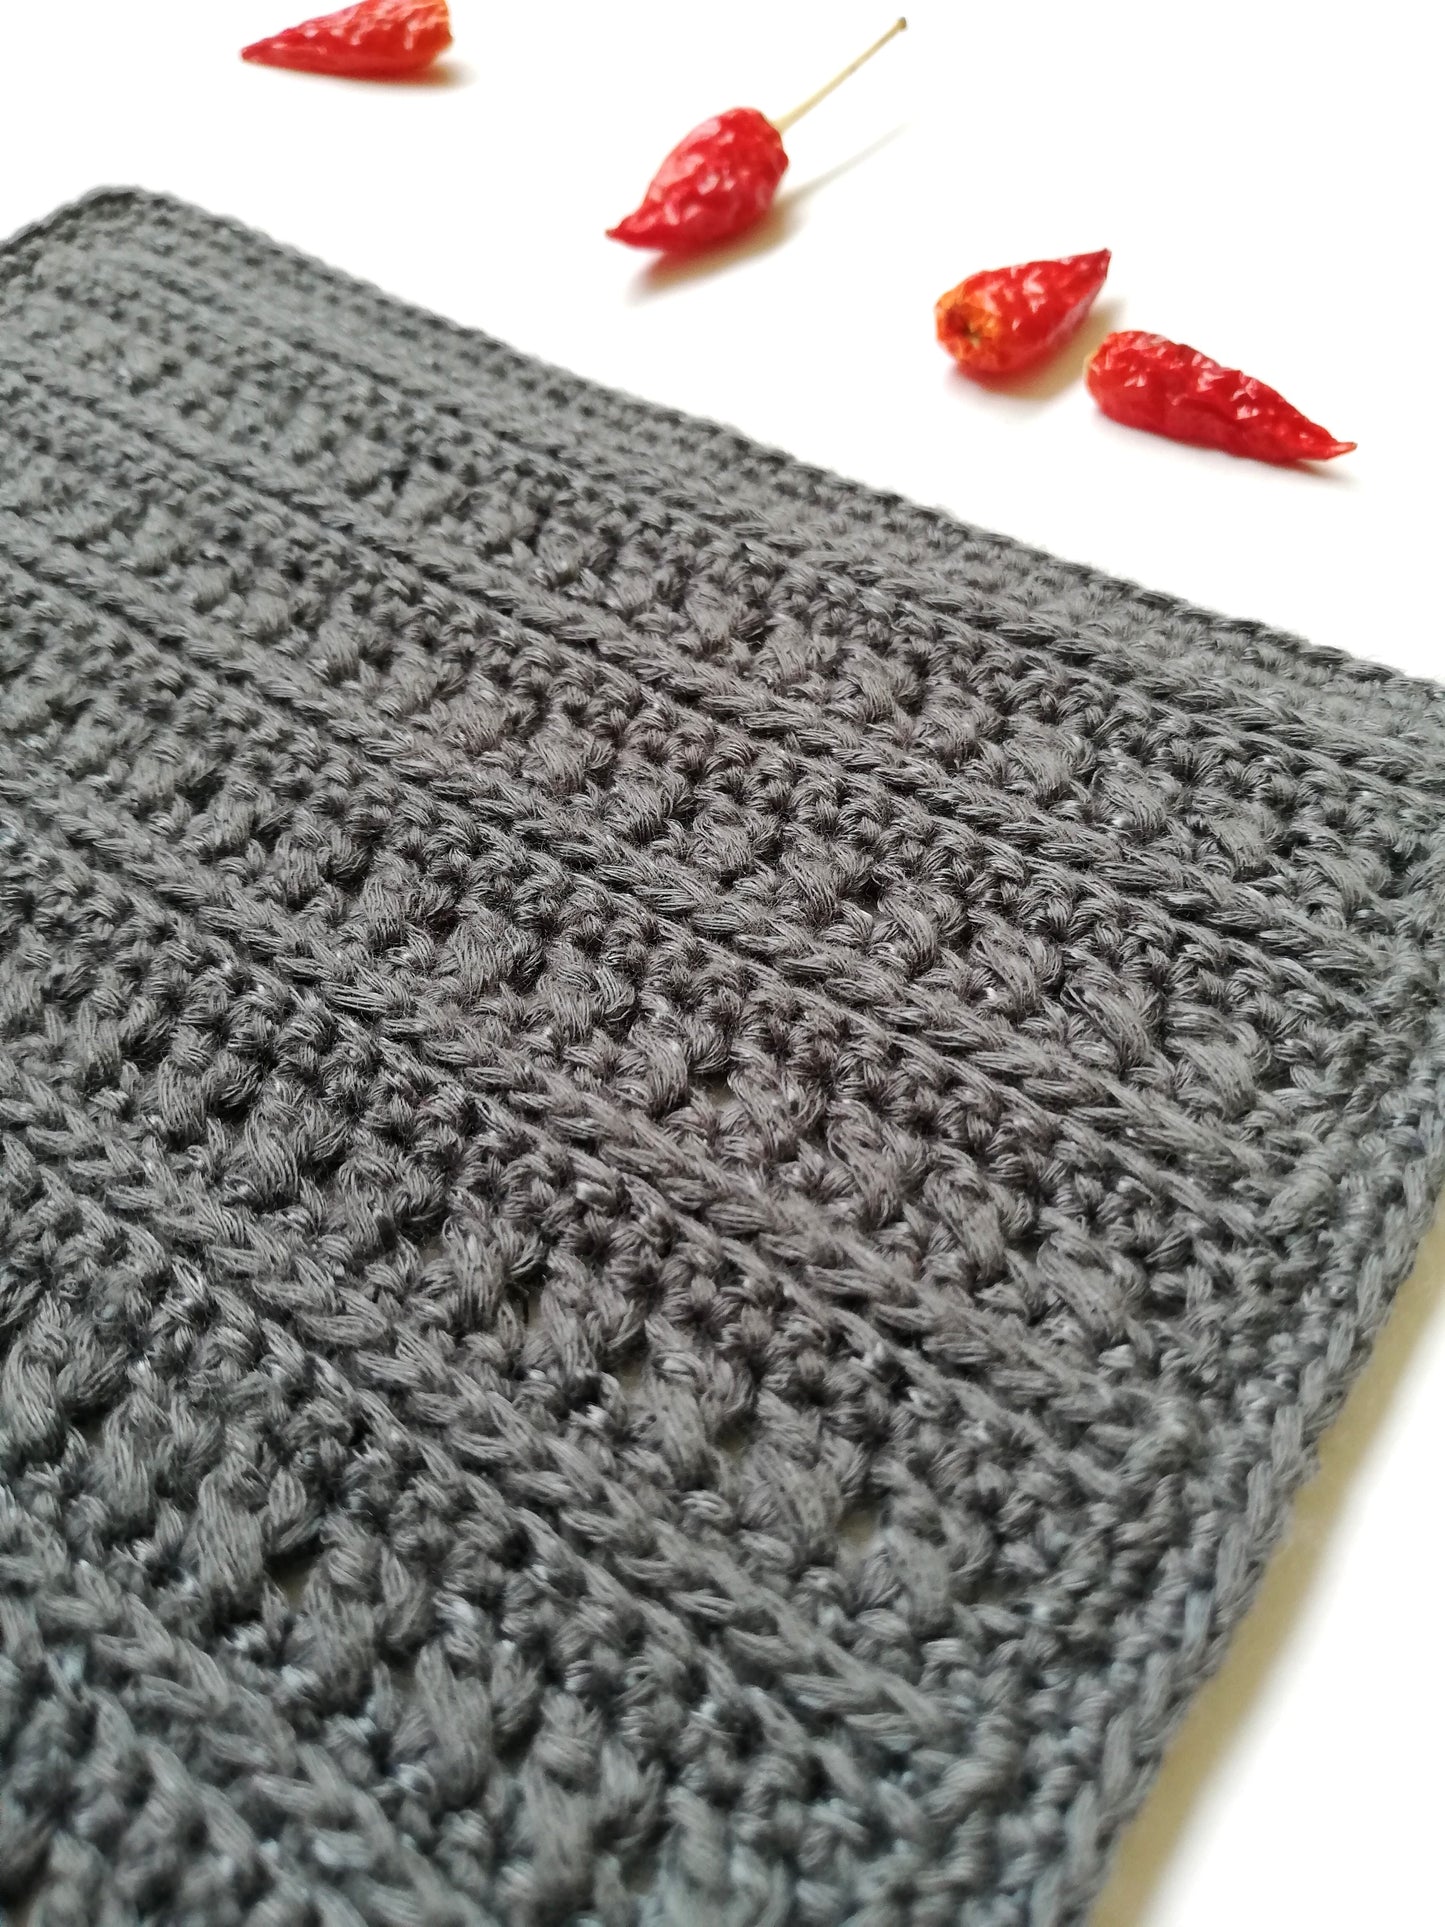 Crochet pattern: cross stitch dishcloth